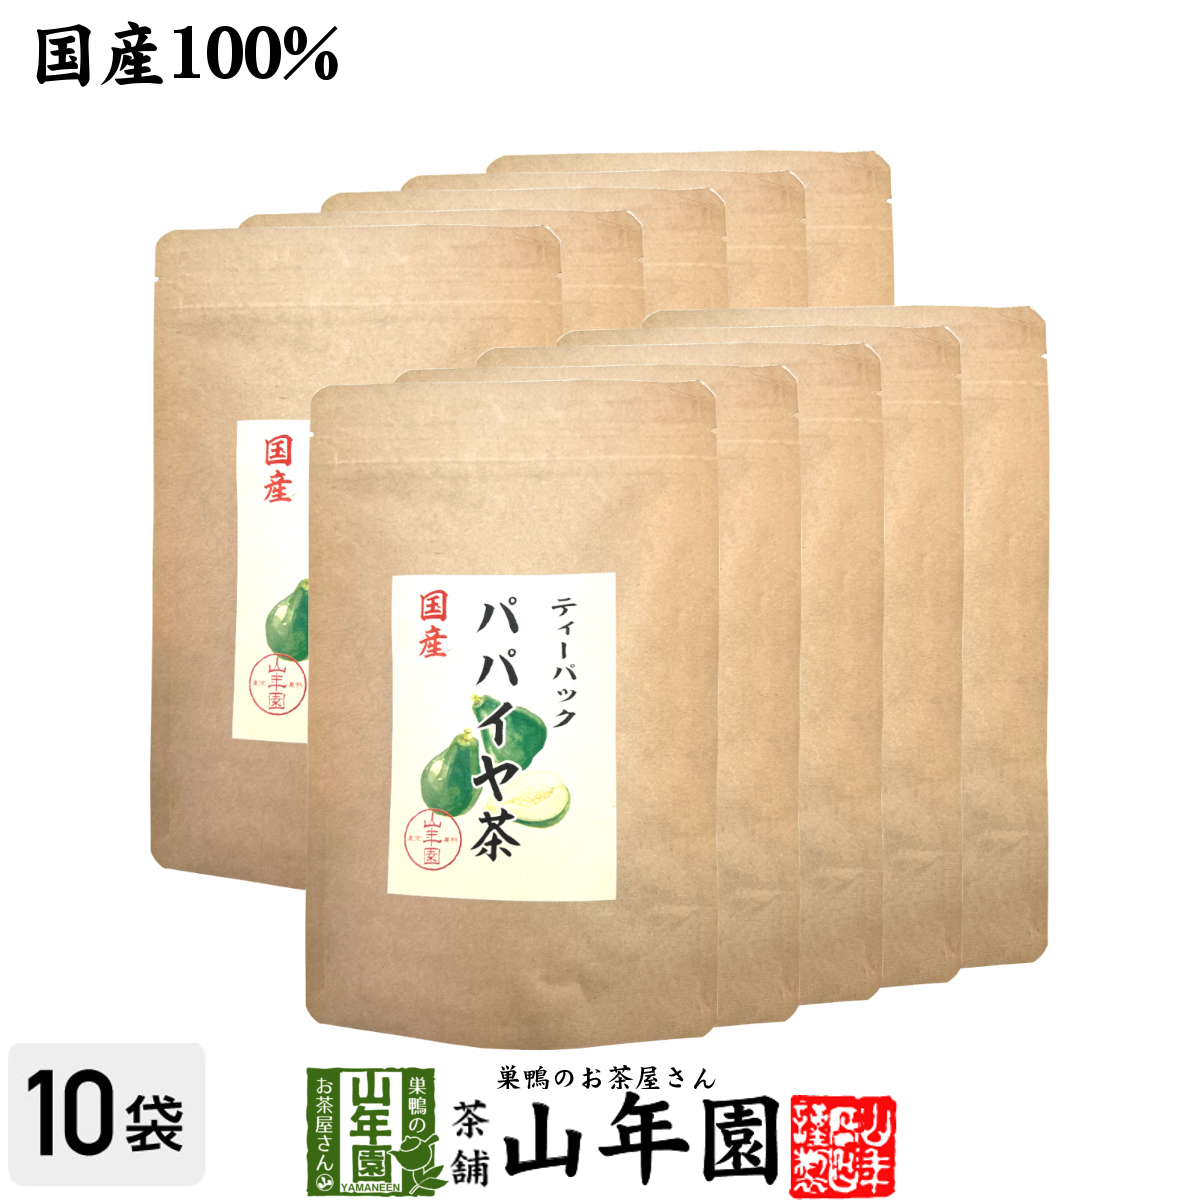  domestic production 100% papaya tea tea bag Miyazaki prefecture production non Cafe in 18g(1.5g×12p)×10 sack set 